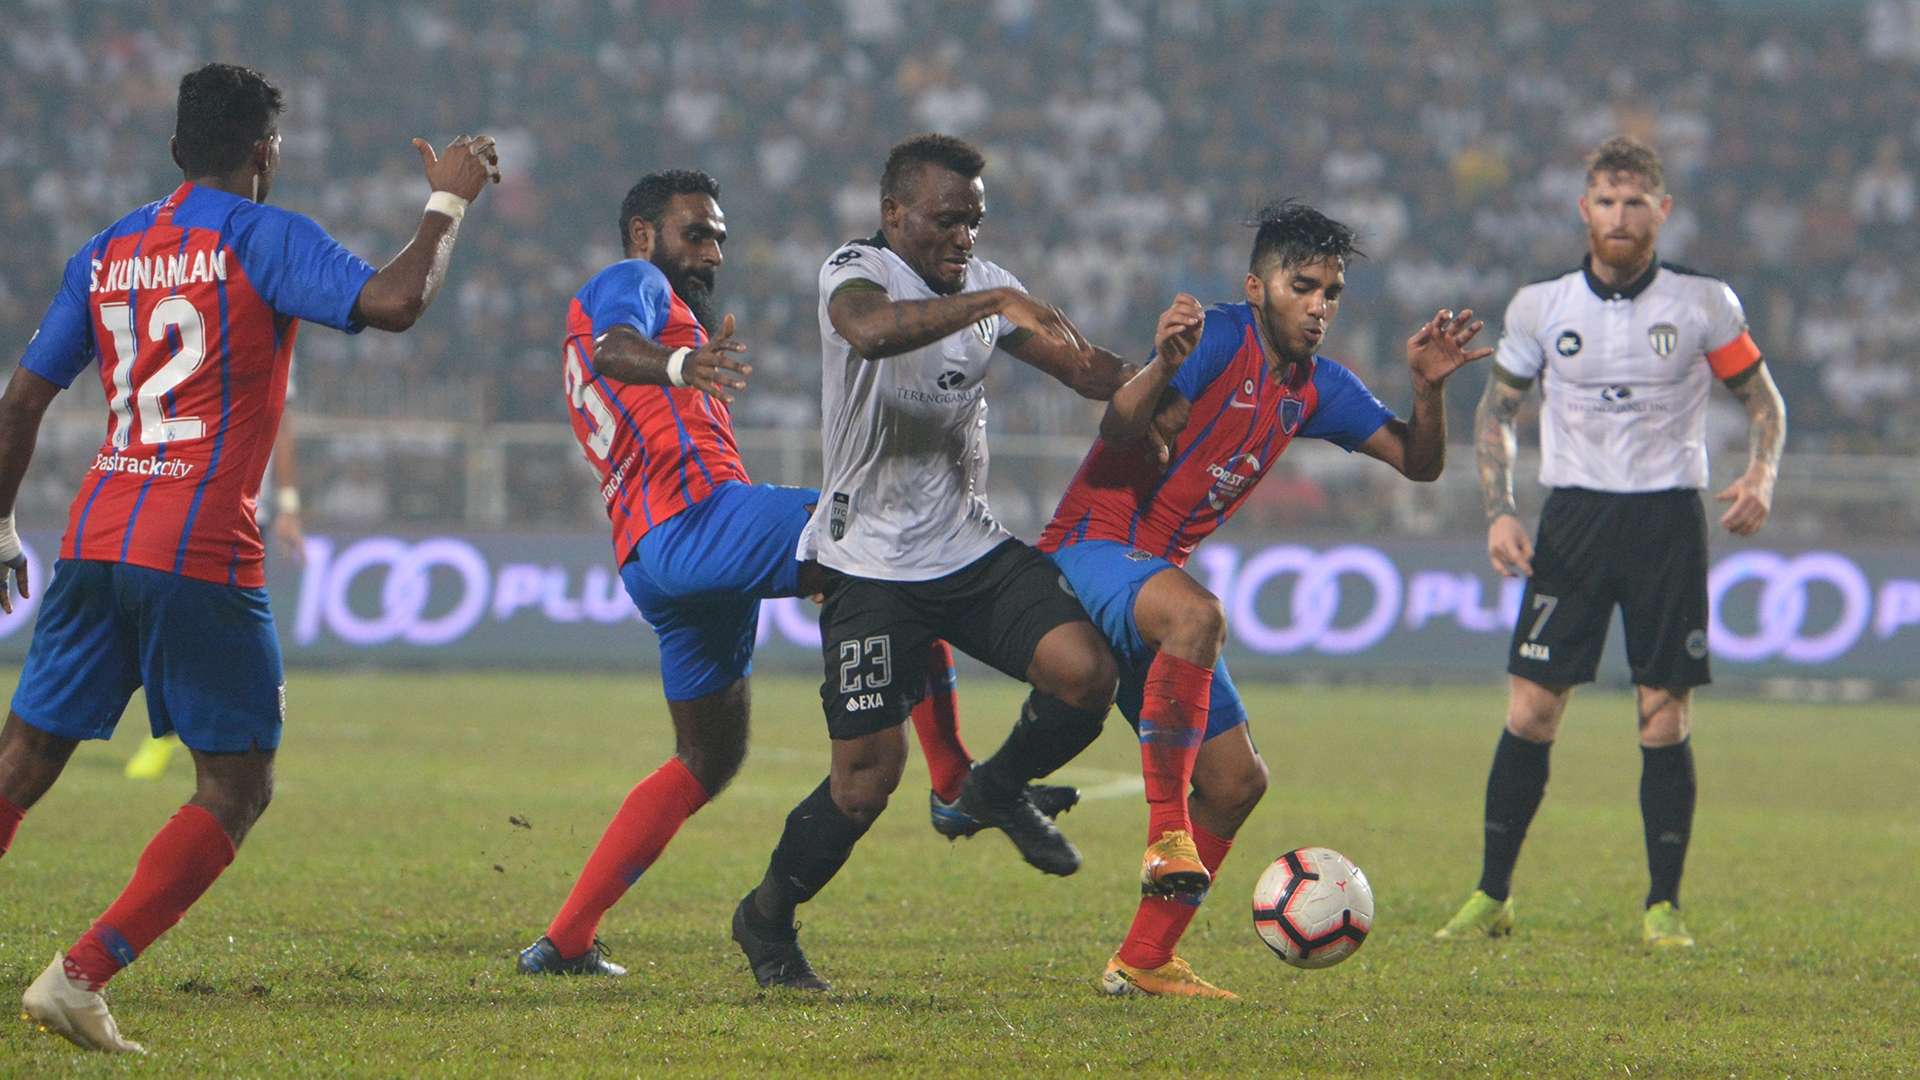 Tchetche Kipre, Leandro Velasquez, Gary Steven Robbat, Terengganu FC v Johor Darul Ta'zim, Malaysia Cup, 21 Sep 2019